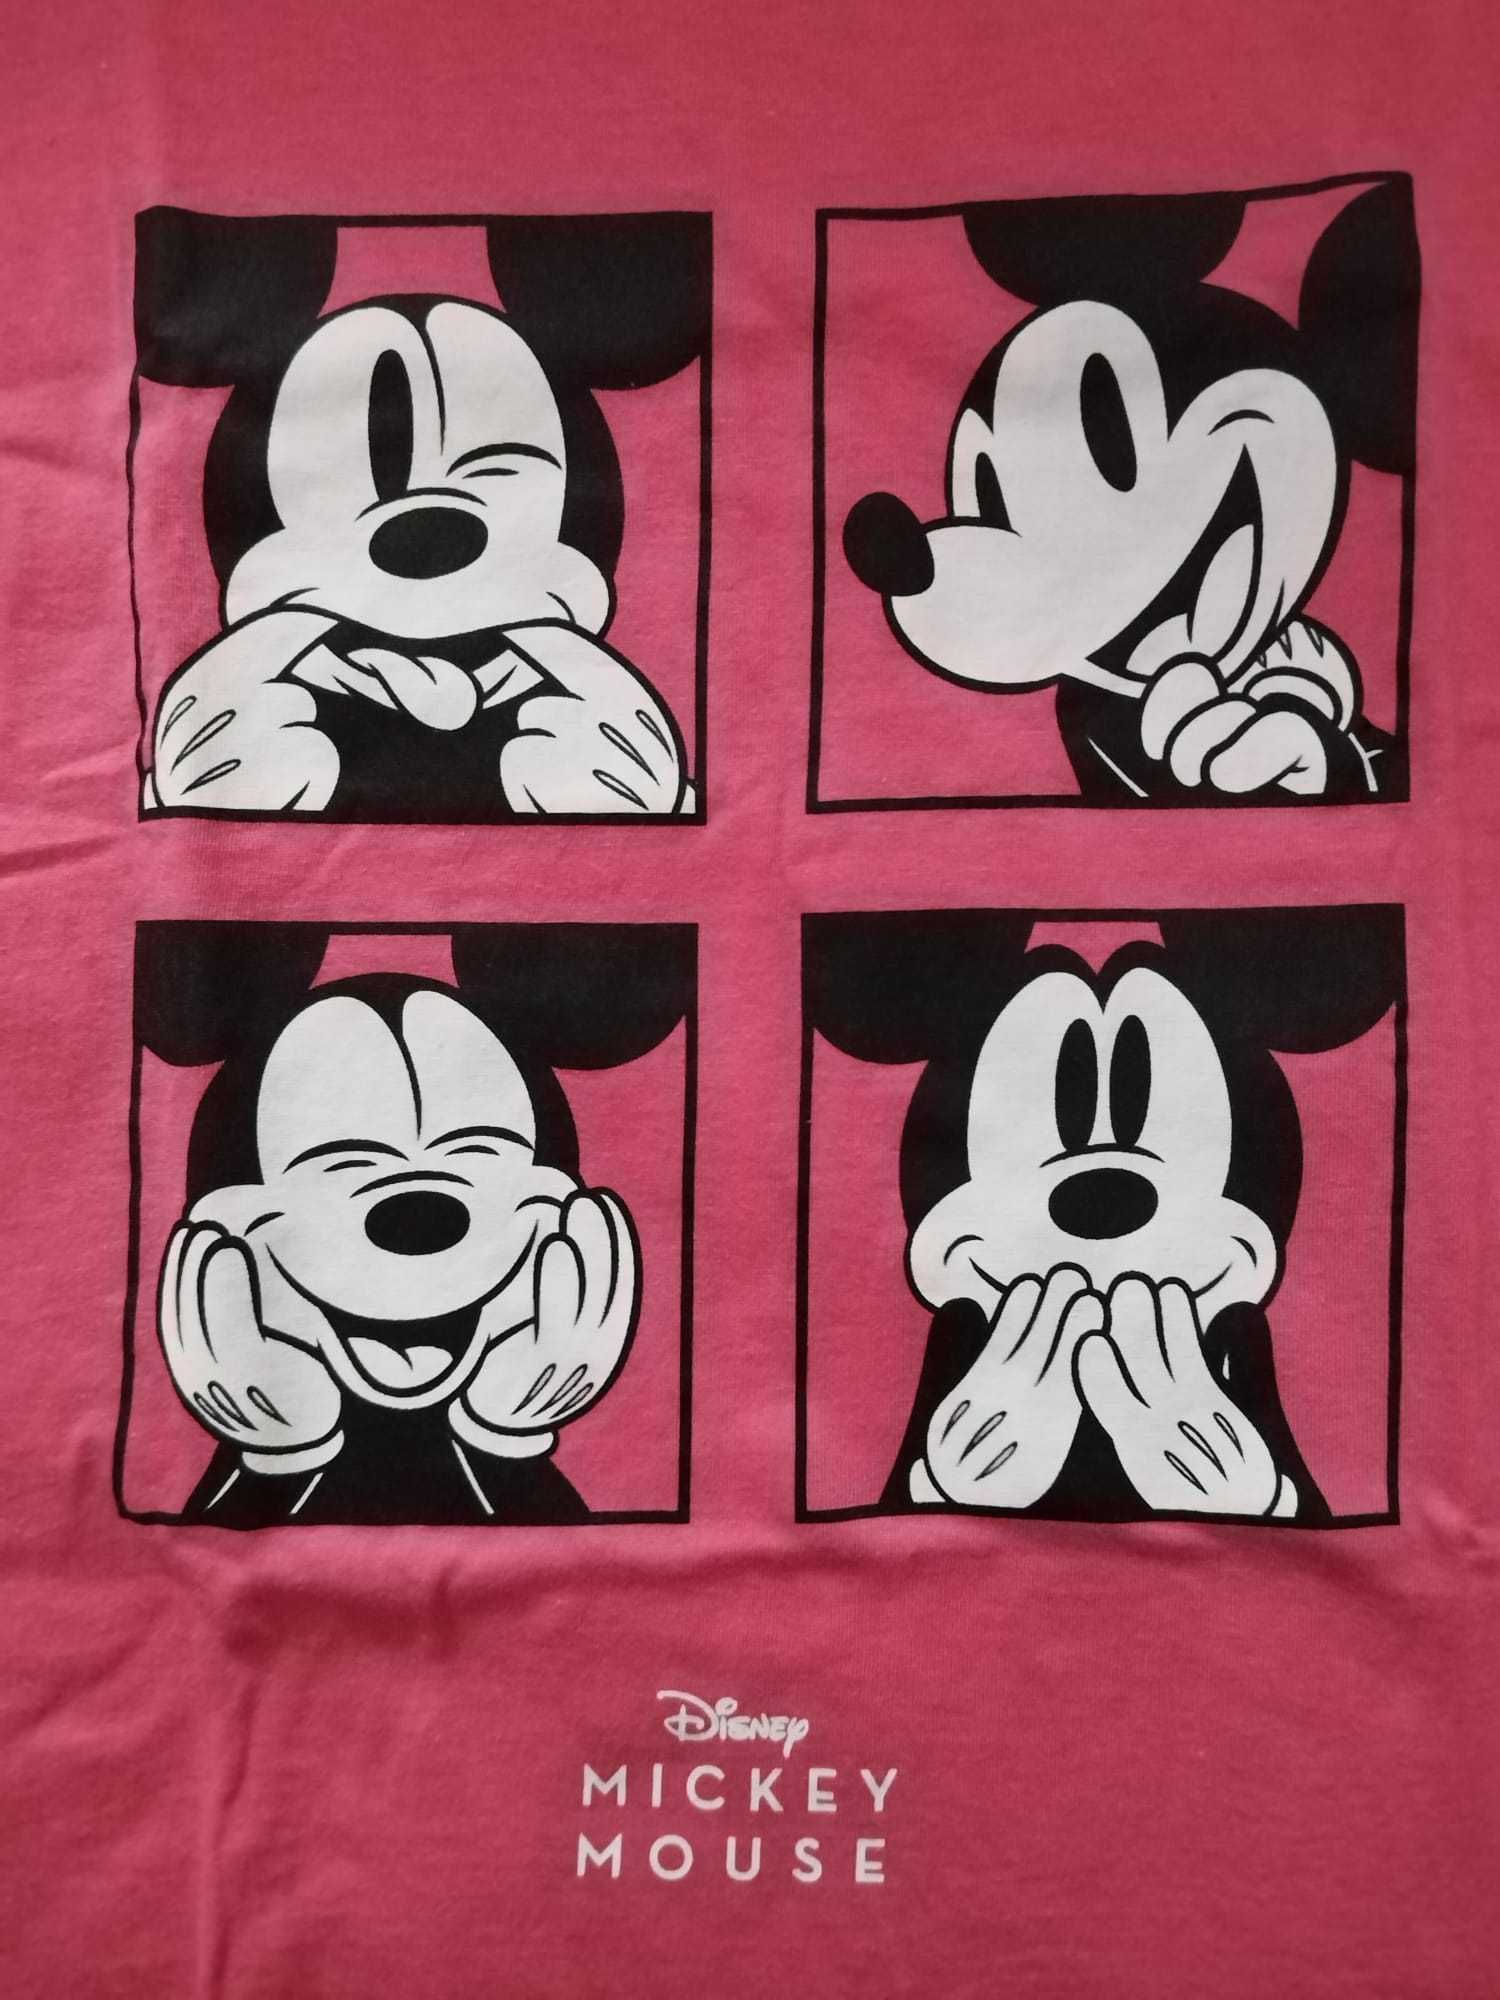 Tricou Mickey Mouse 158-164